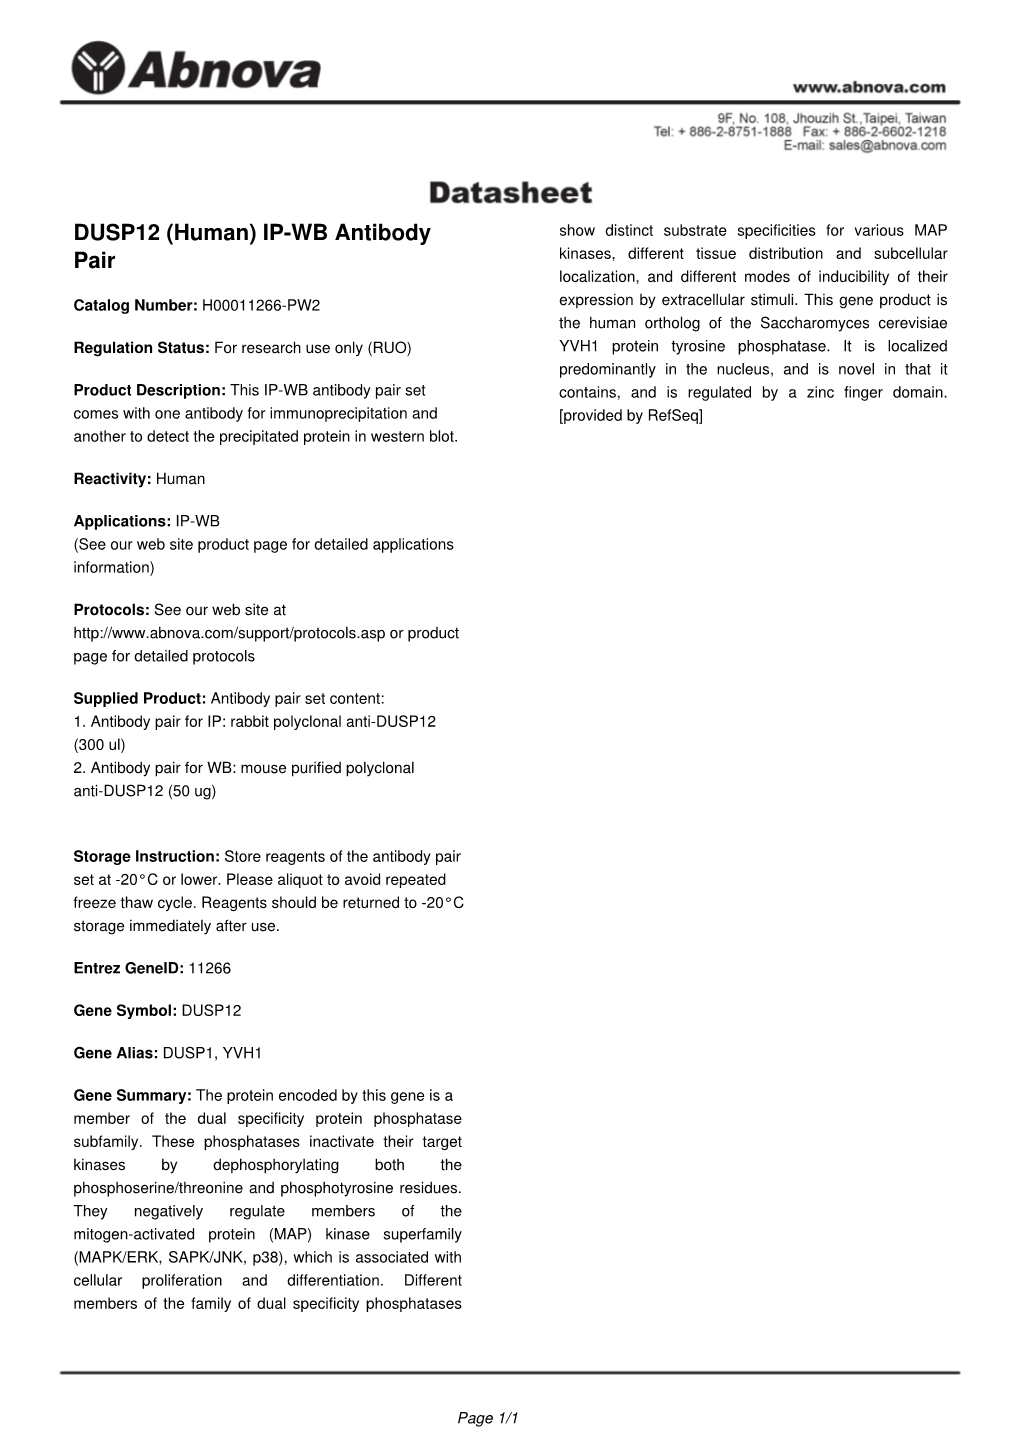 DUSP12 (Human) IP-WB Antibody Pair